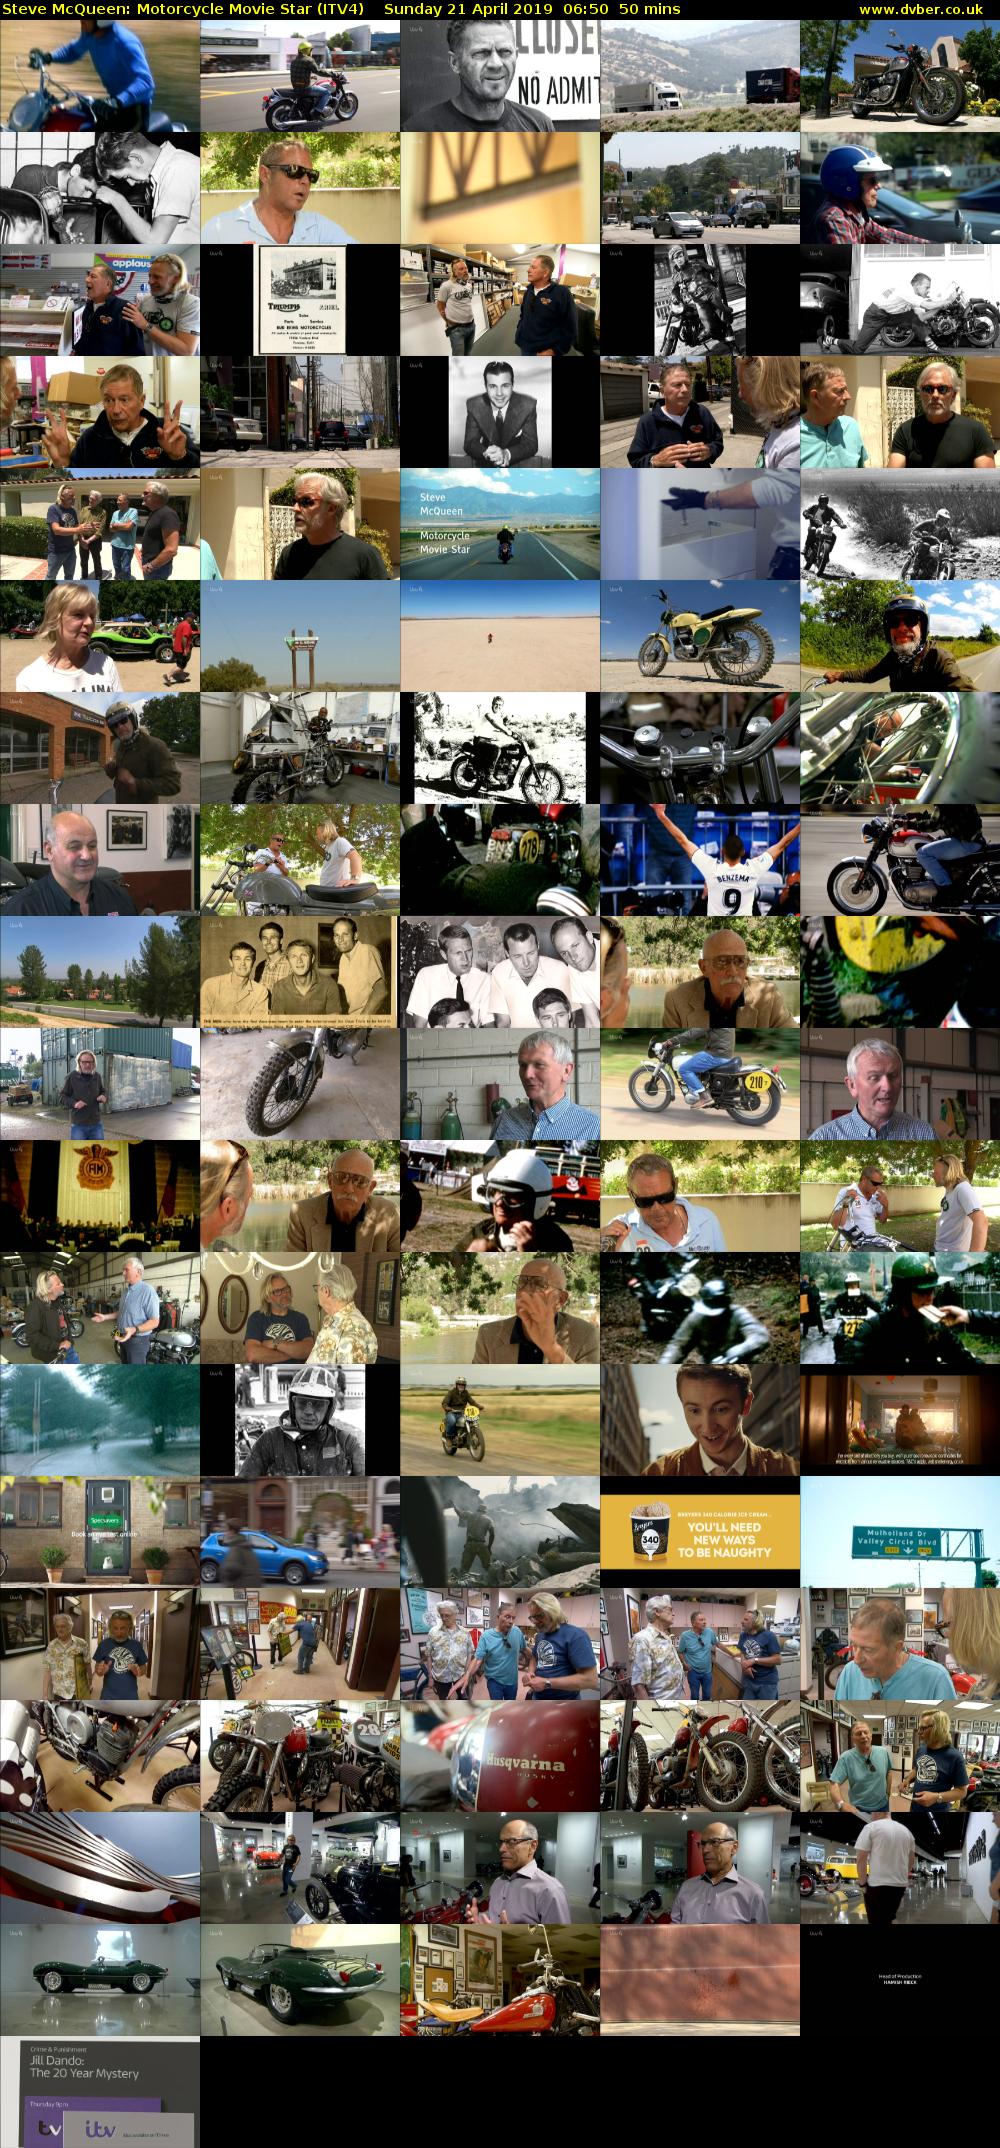 Steve McQueen: Motorcycle Movie Star (ITV4) Sunday 21 April 2019 06:50 - 07:40